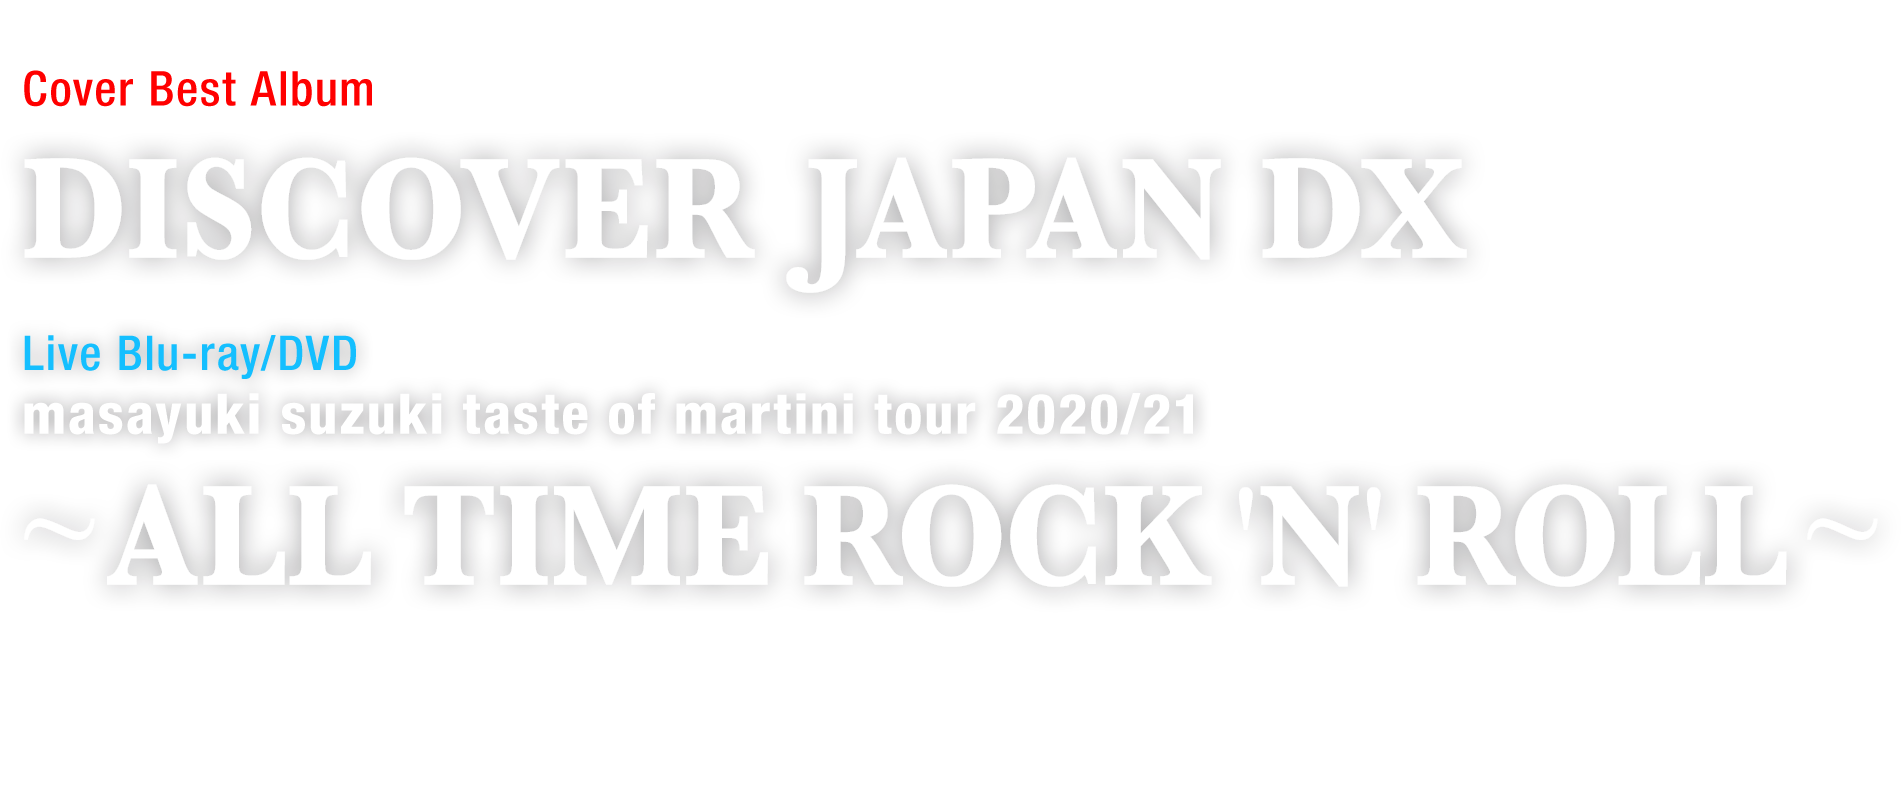 Cover Best Album・DISCOVER JAPAN DX/Concert Films・ALL TIME ROCK 'N' ROLL